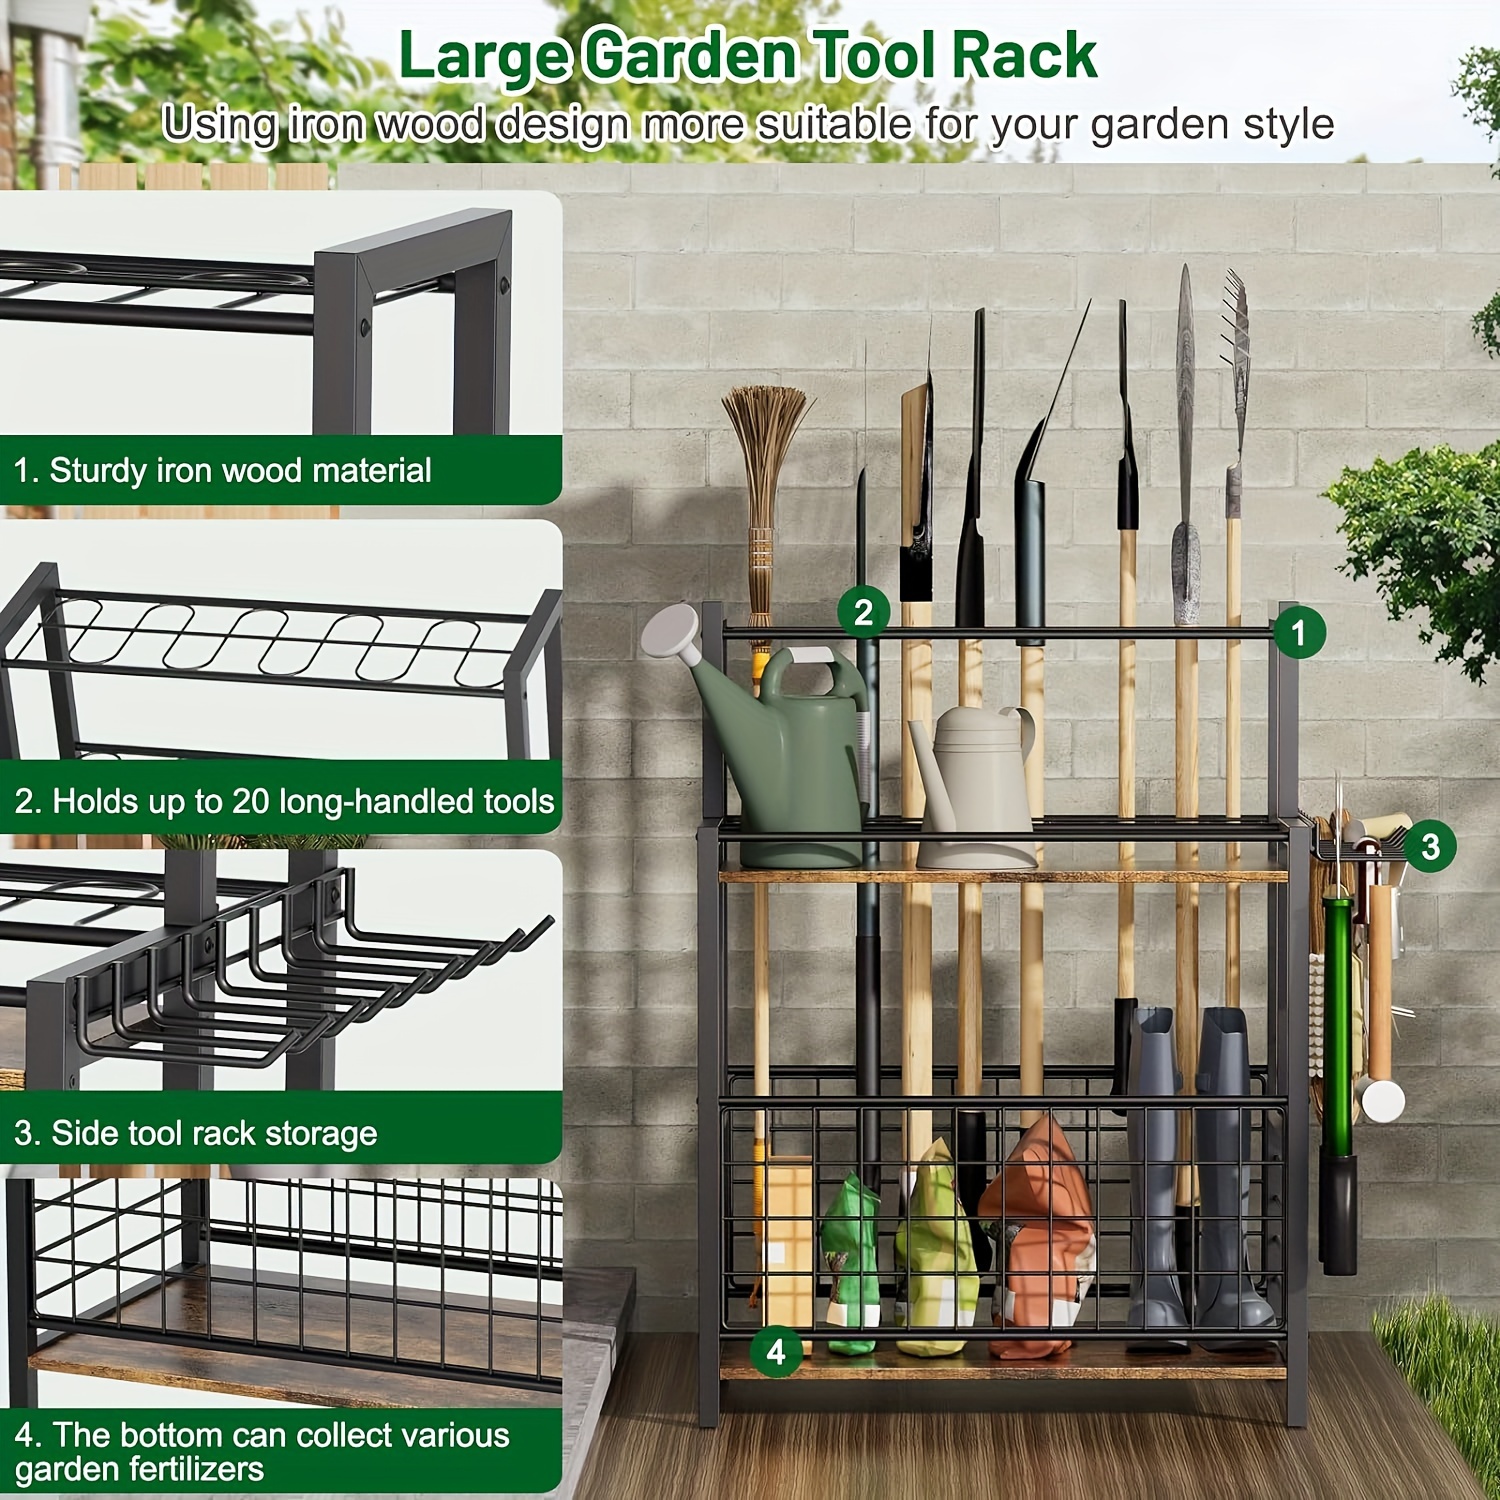 MYTHINGLOGIC Garden Tool Organizer Racks Garage Yard Tool Racks with Wheels  Garage Organizers Storage Hold Garden Tools Cart Yard Tool Holder for